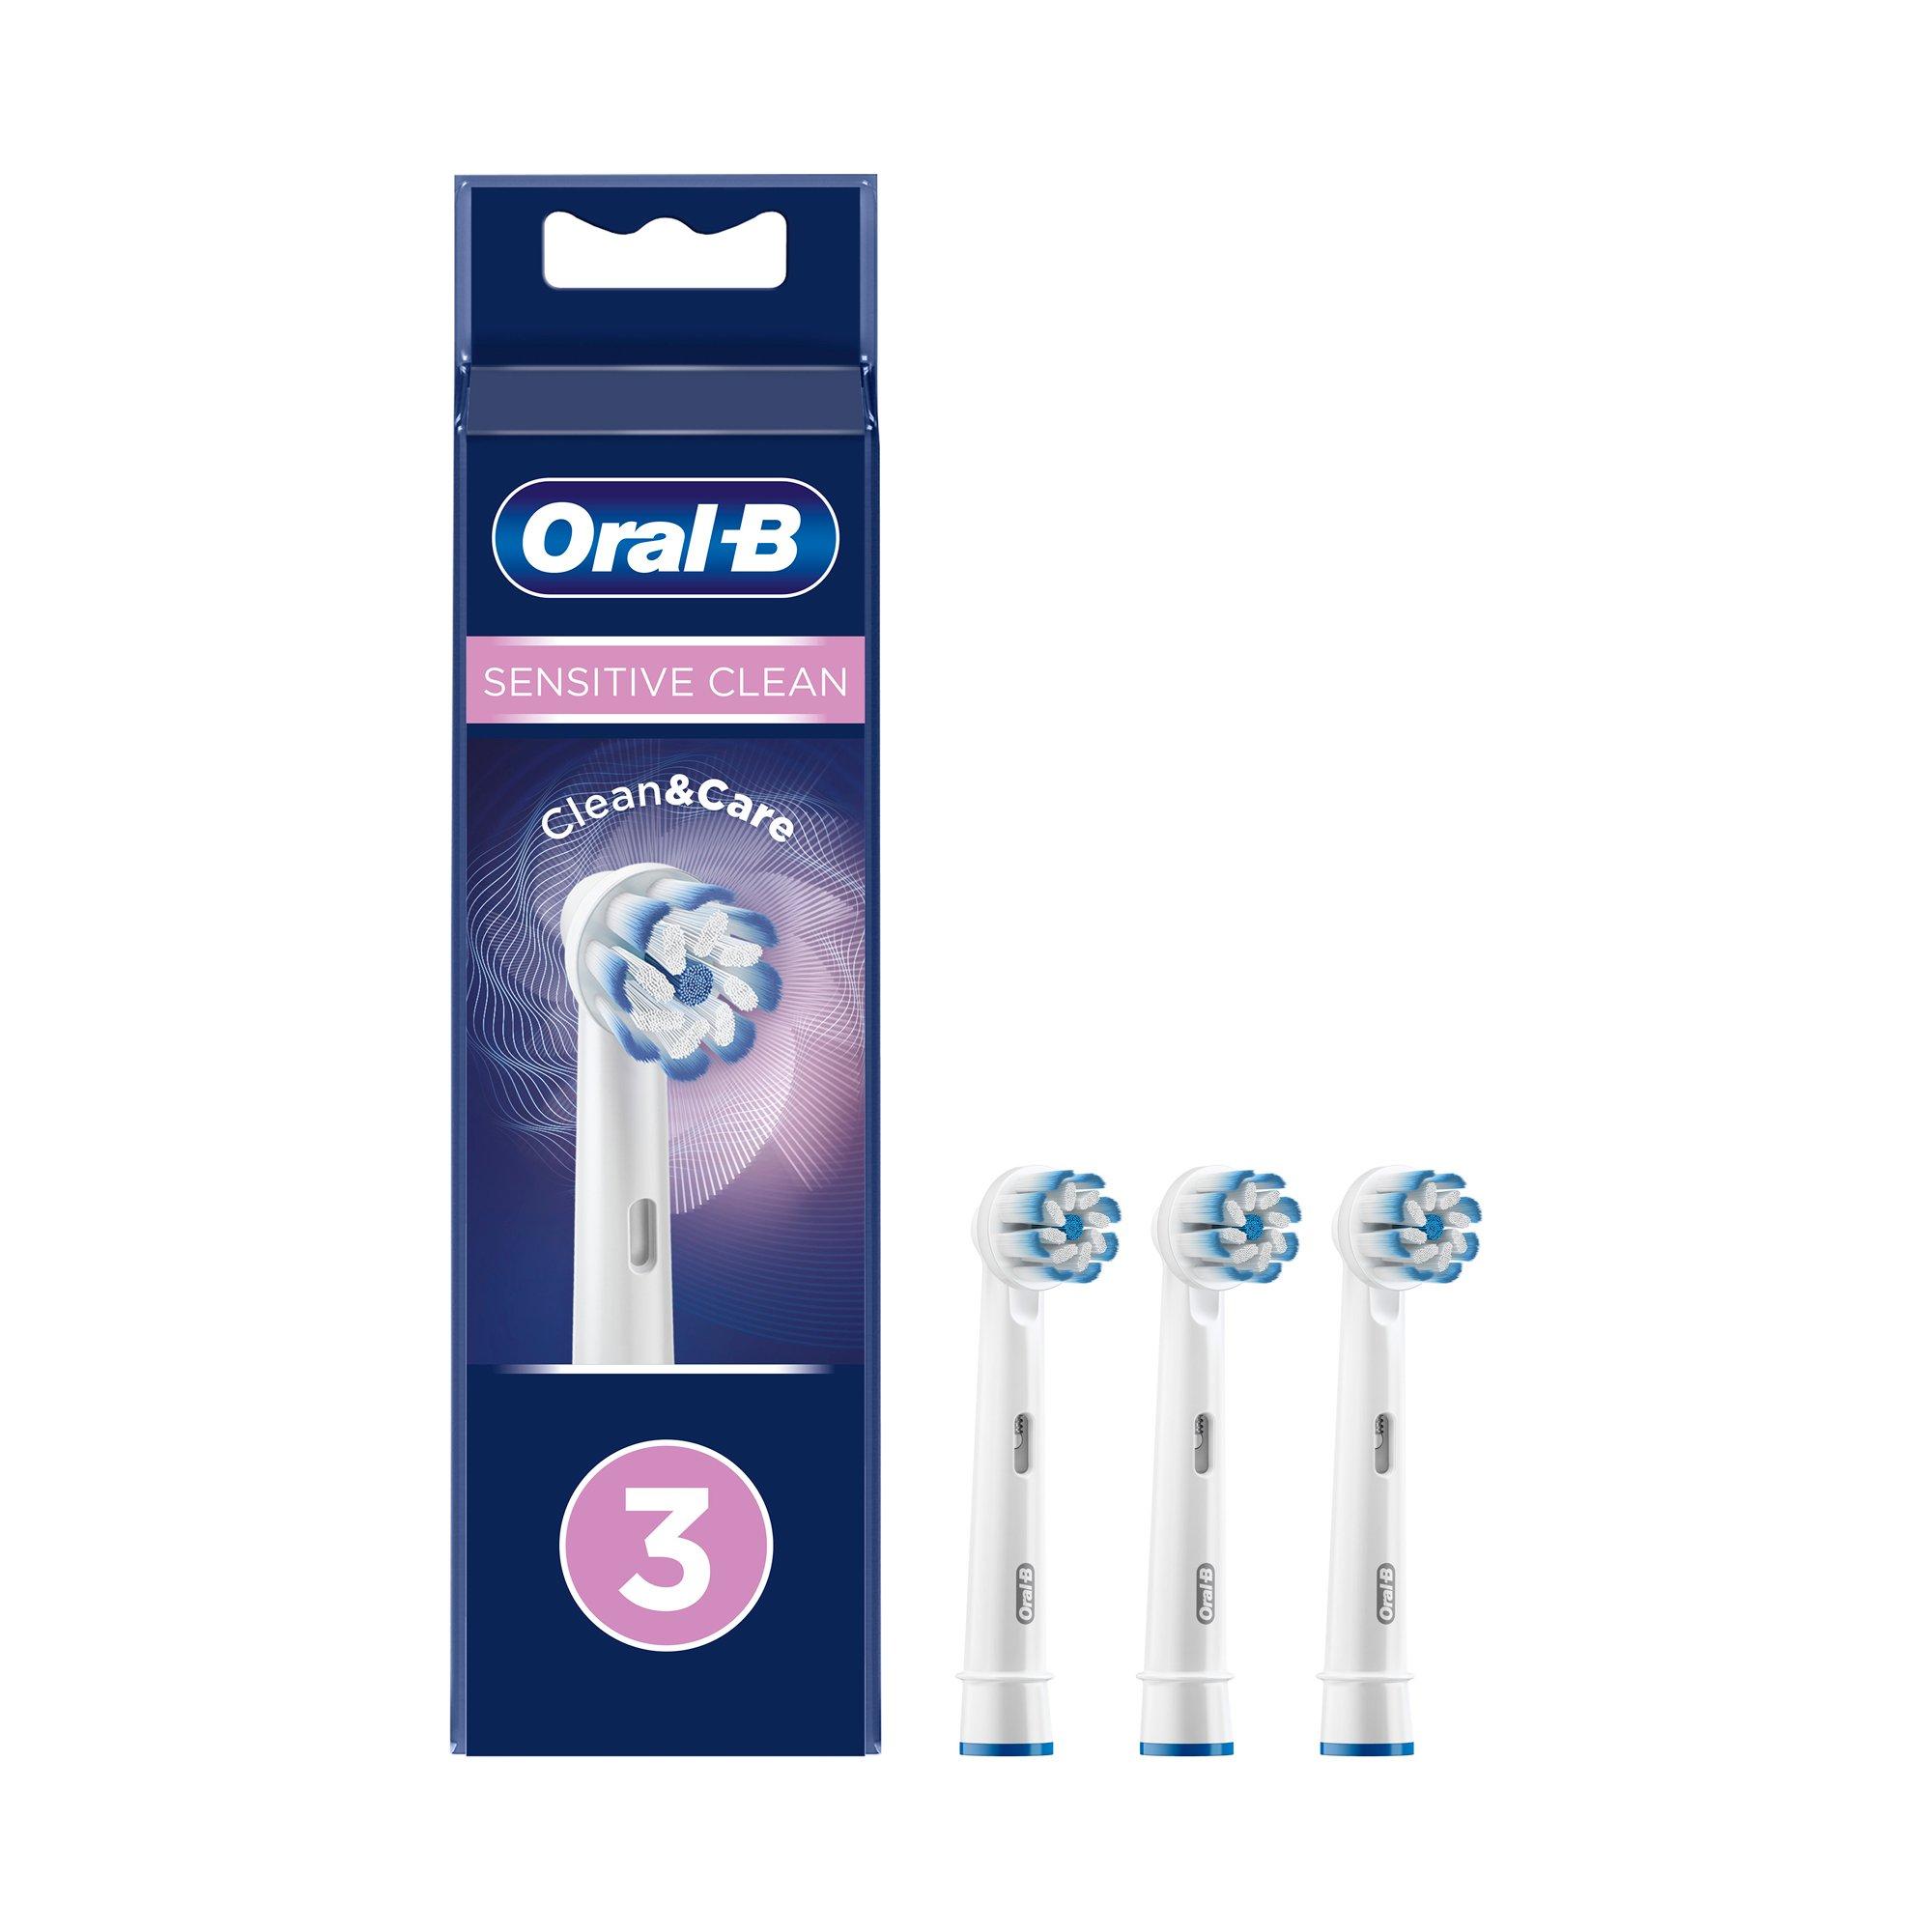 Oral B Sensitive Clean 3er oral b